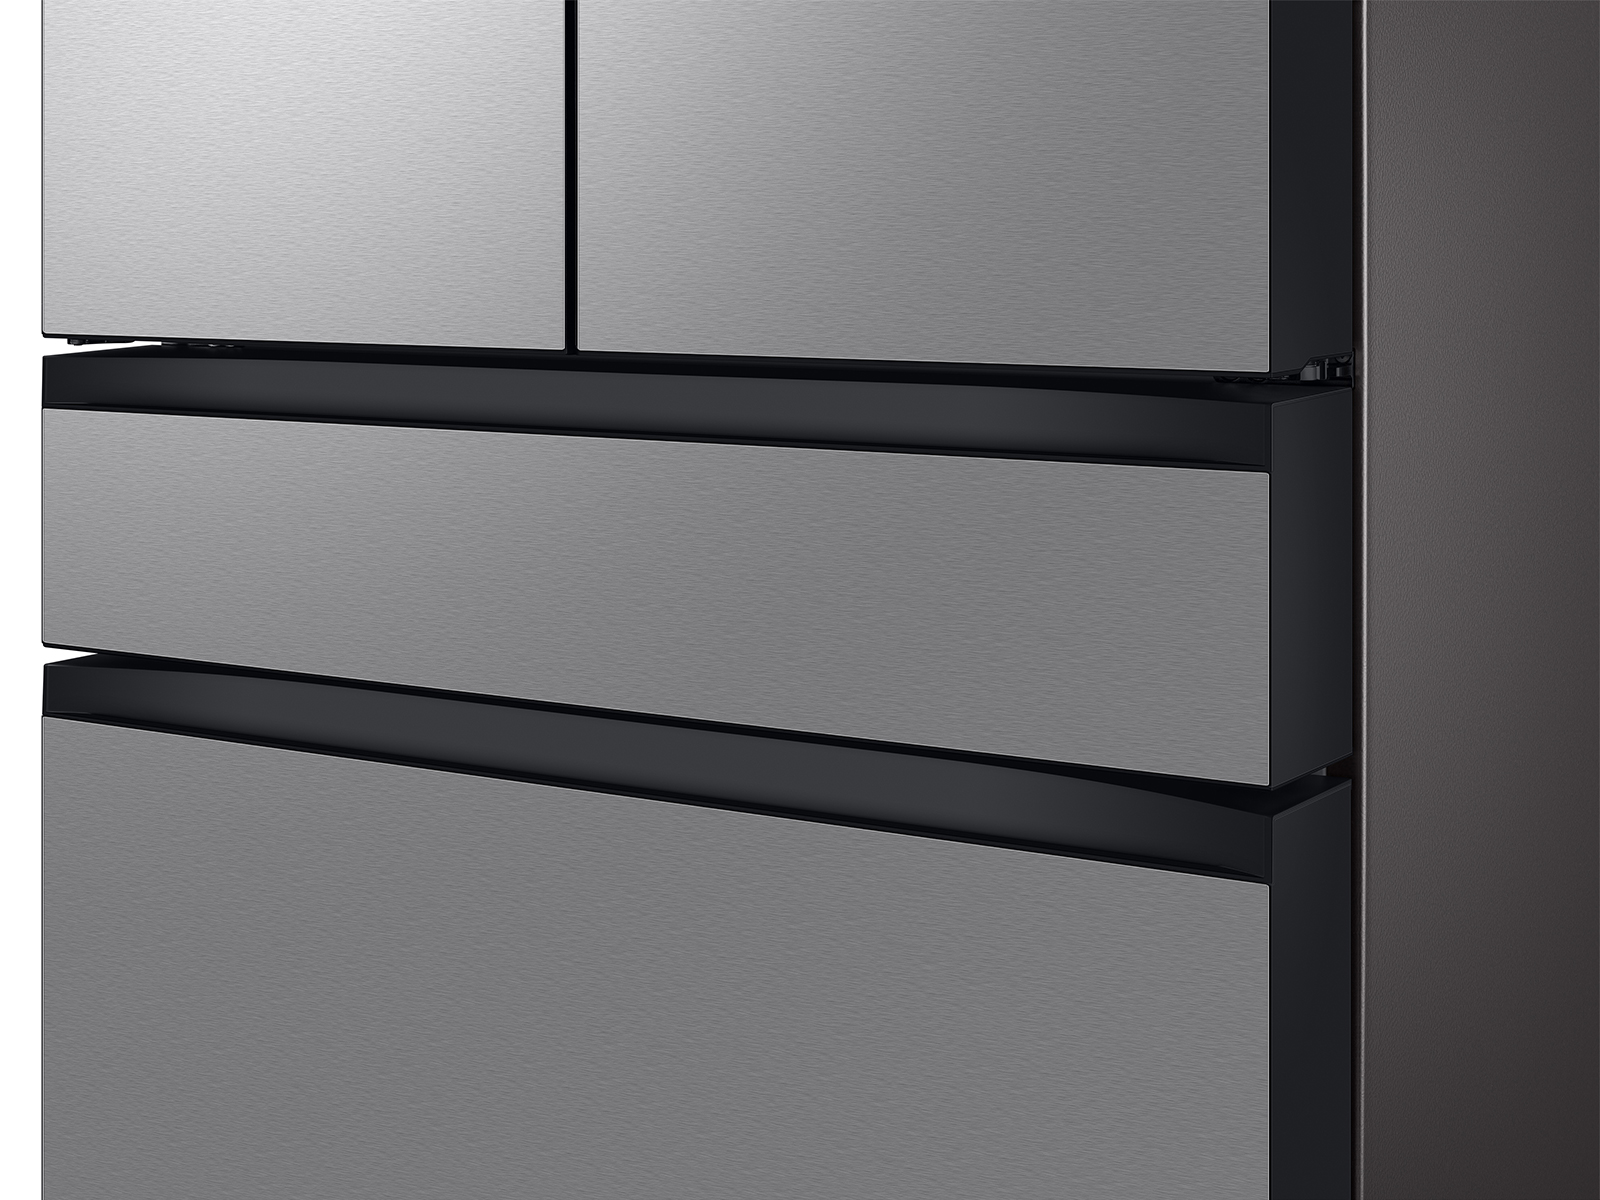 Thumbnail image of Bespoke 4-Door French Door Refrigerator (29 cu. ft.) with Beverage Center™ in Stainless Steel